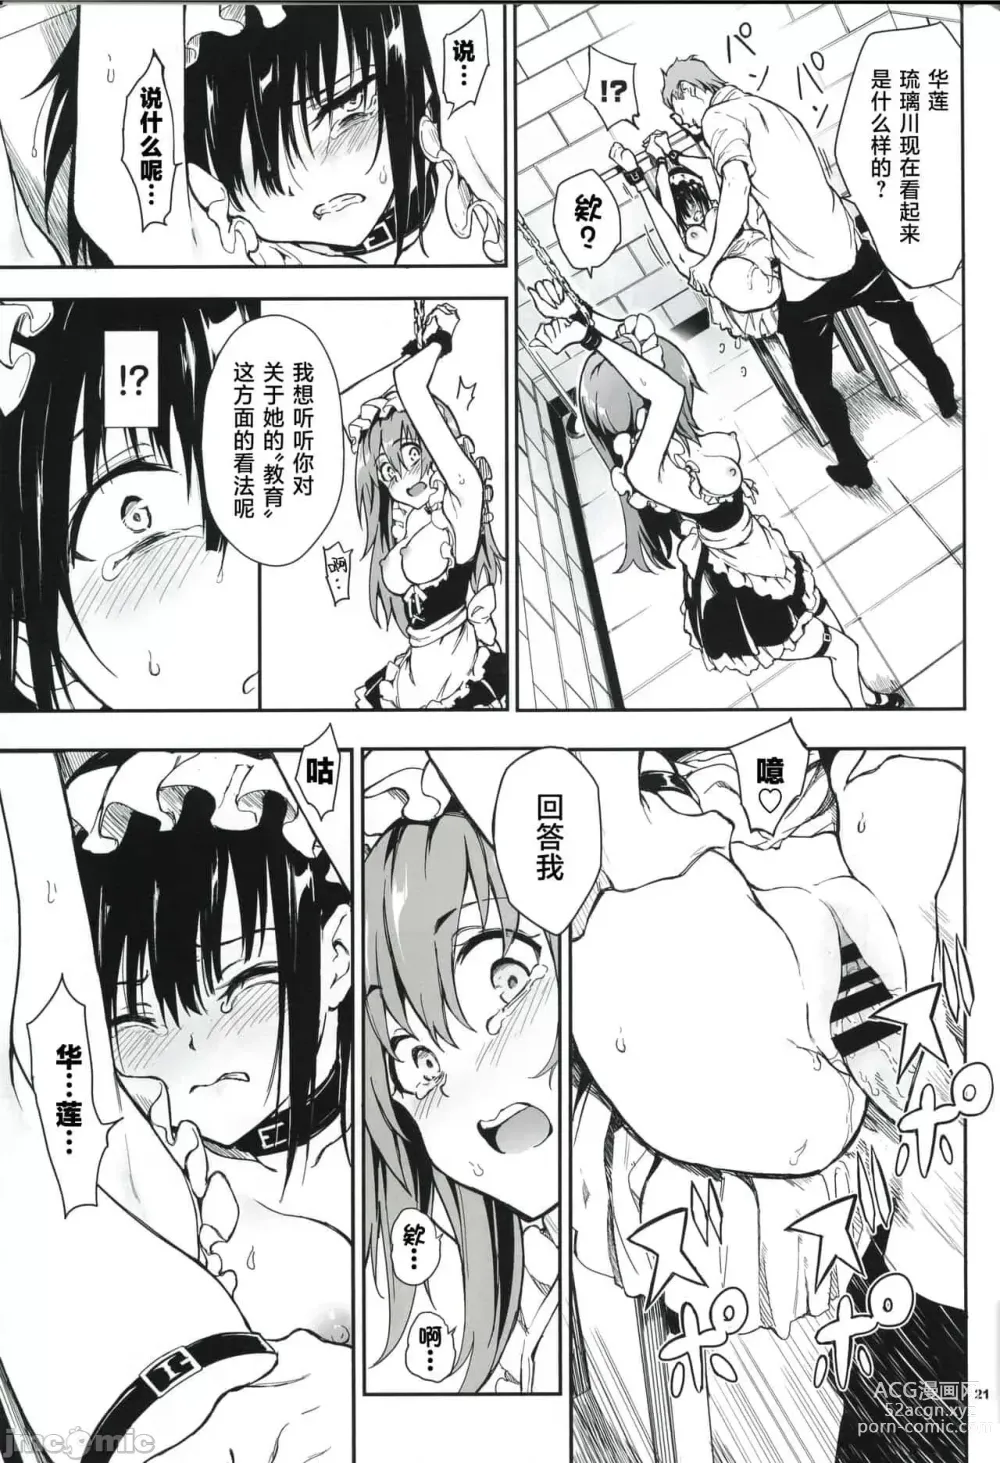 Page 146 of manga メイド教育 1-6